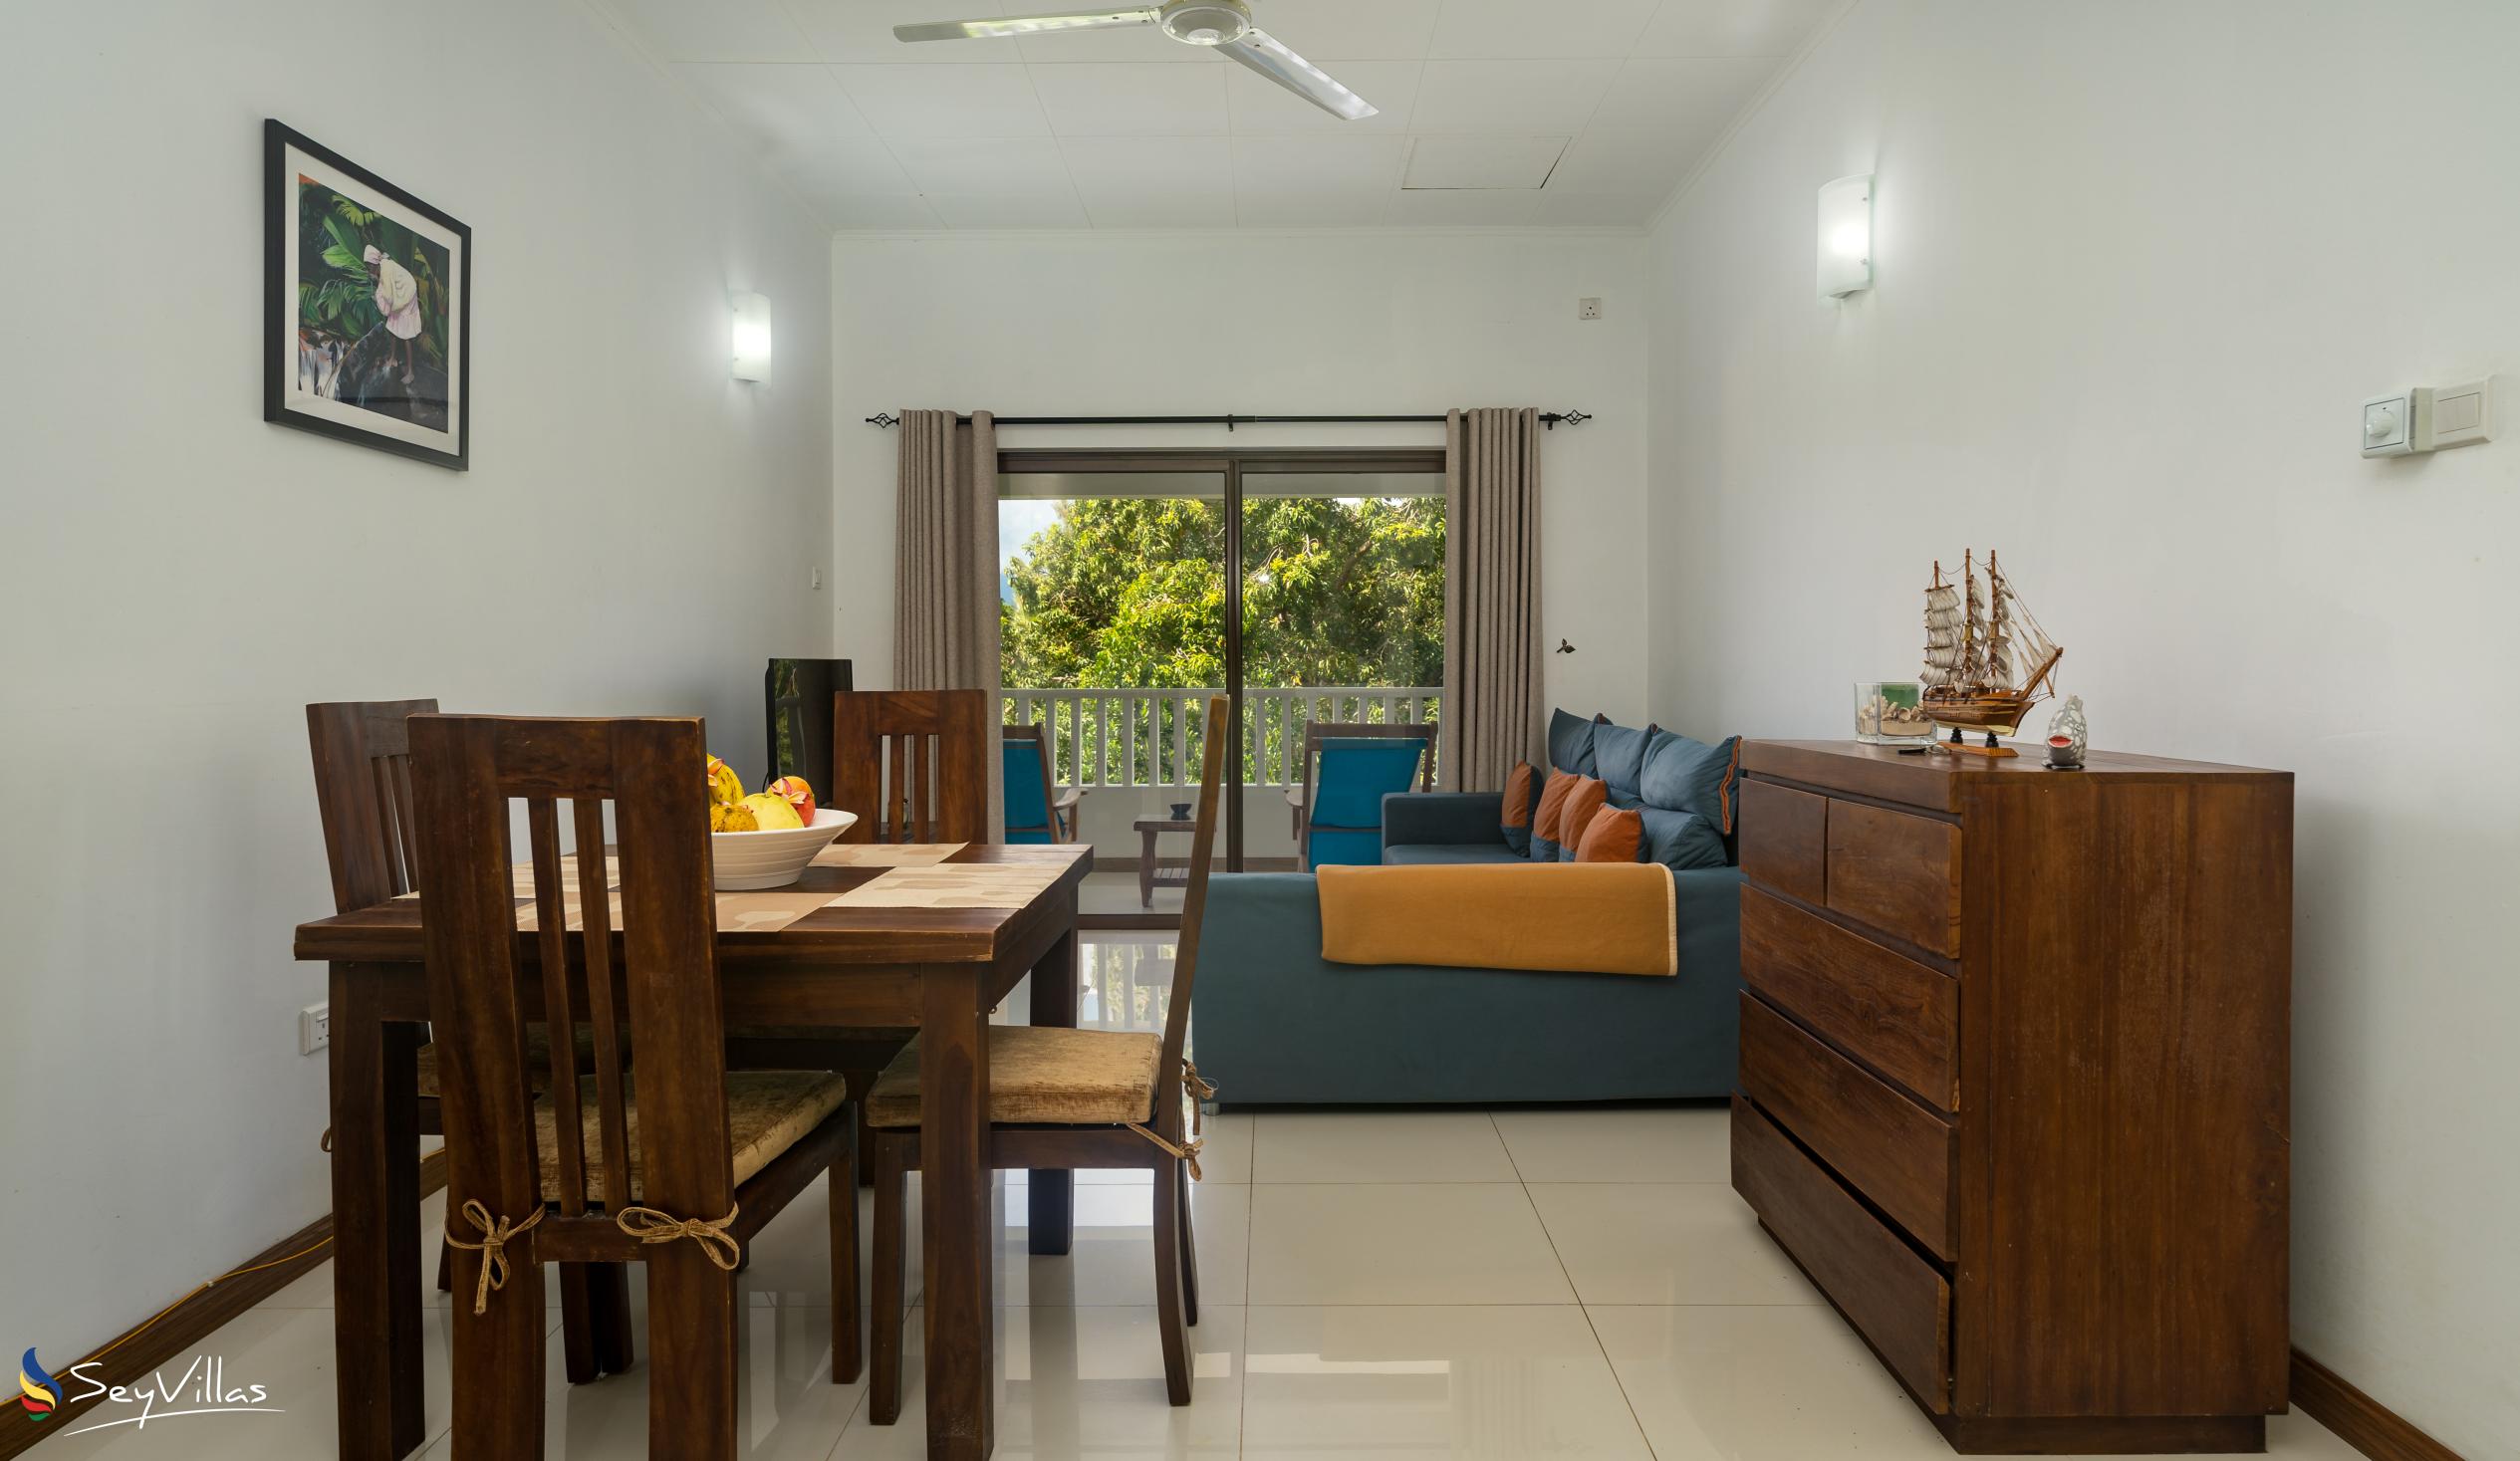 Foto 68: Kanasuk Self Catering Apartments - Appartamento Tamarin con 1 camera - Mahé (Seychelles)